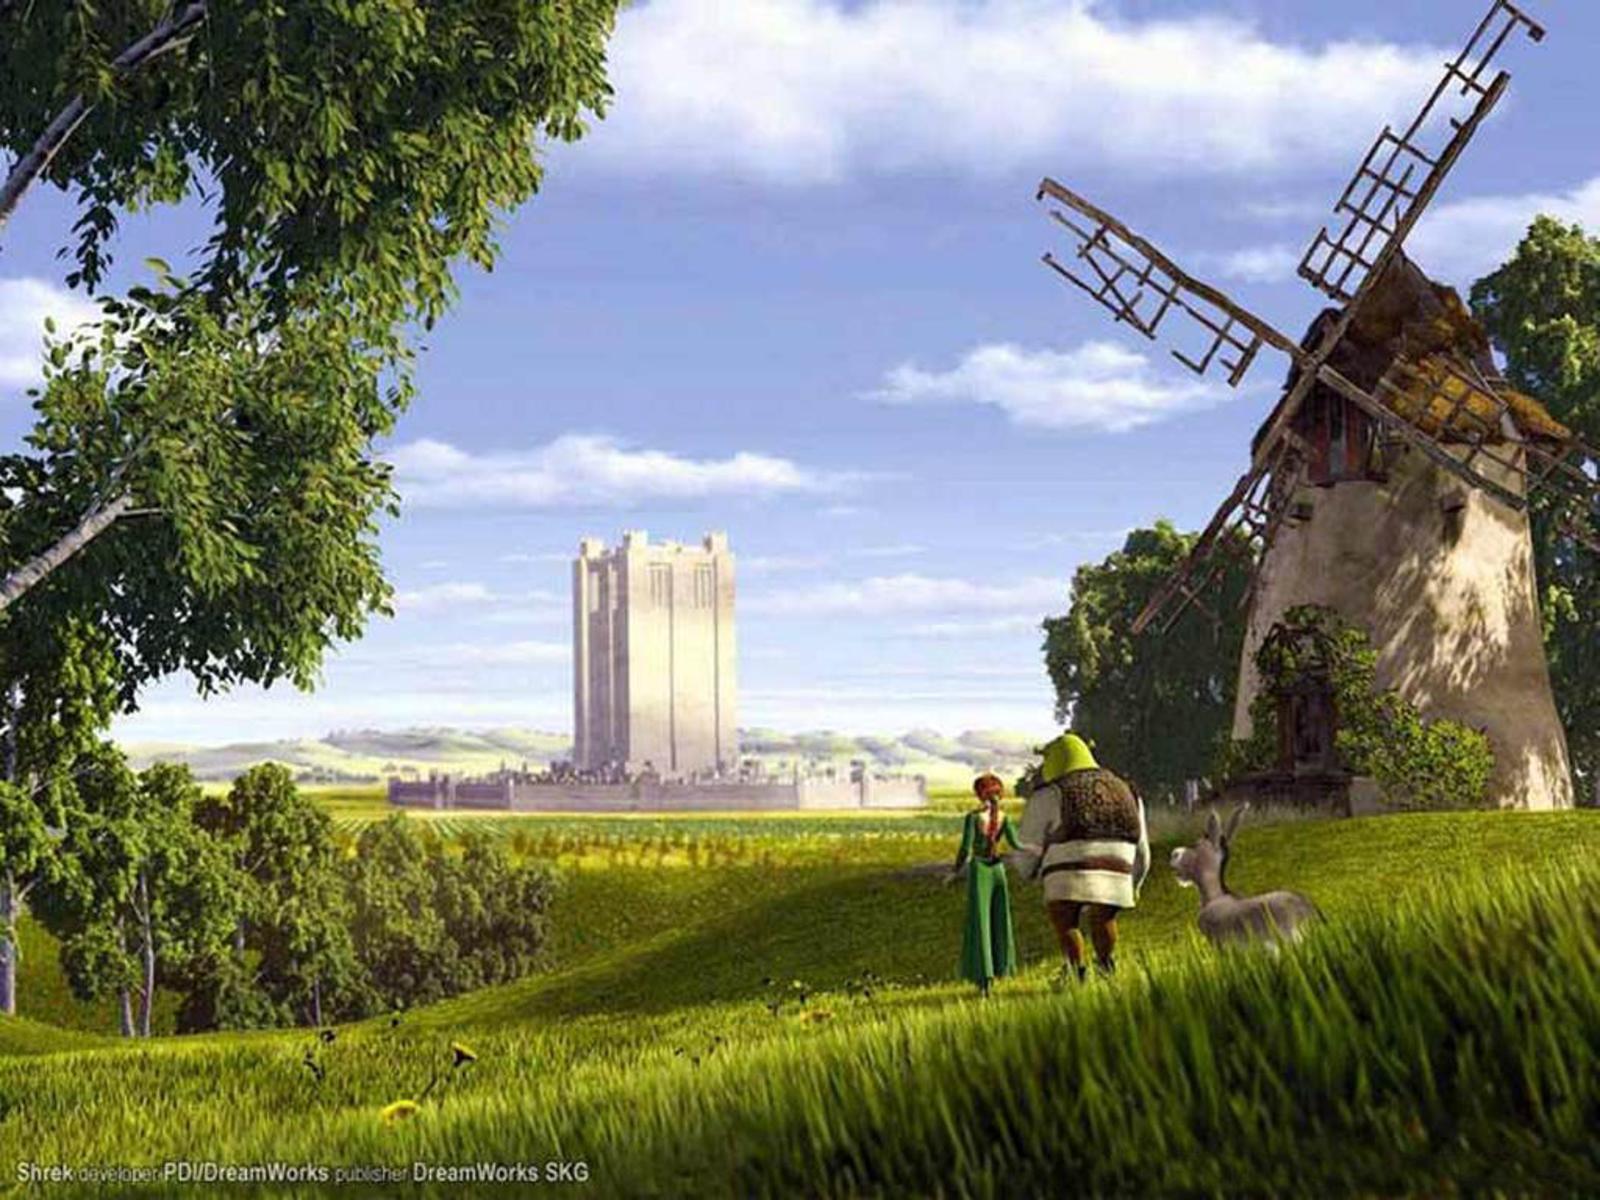 Shrek cartoon scenery free desktop background wallpaper image